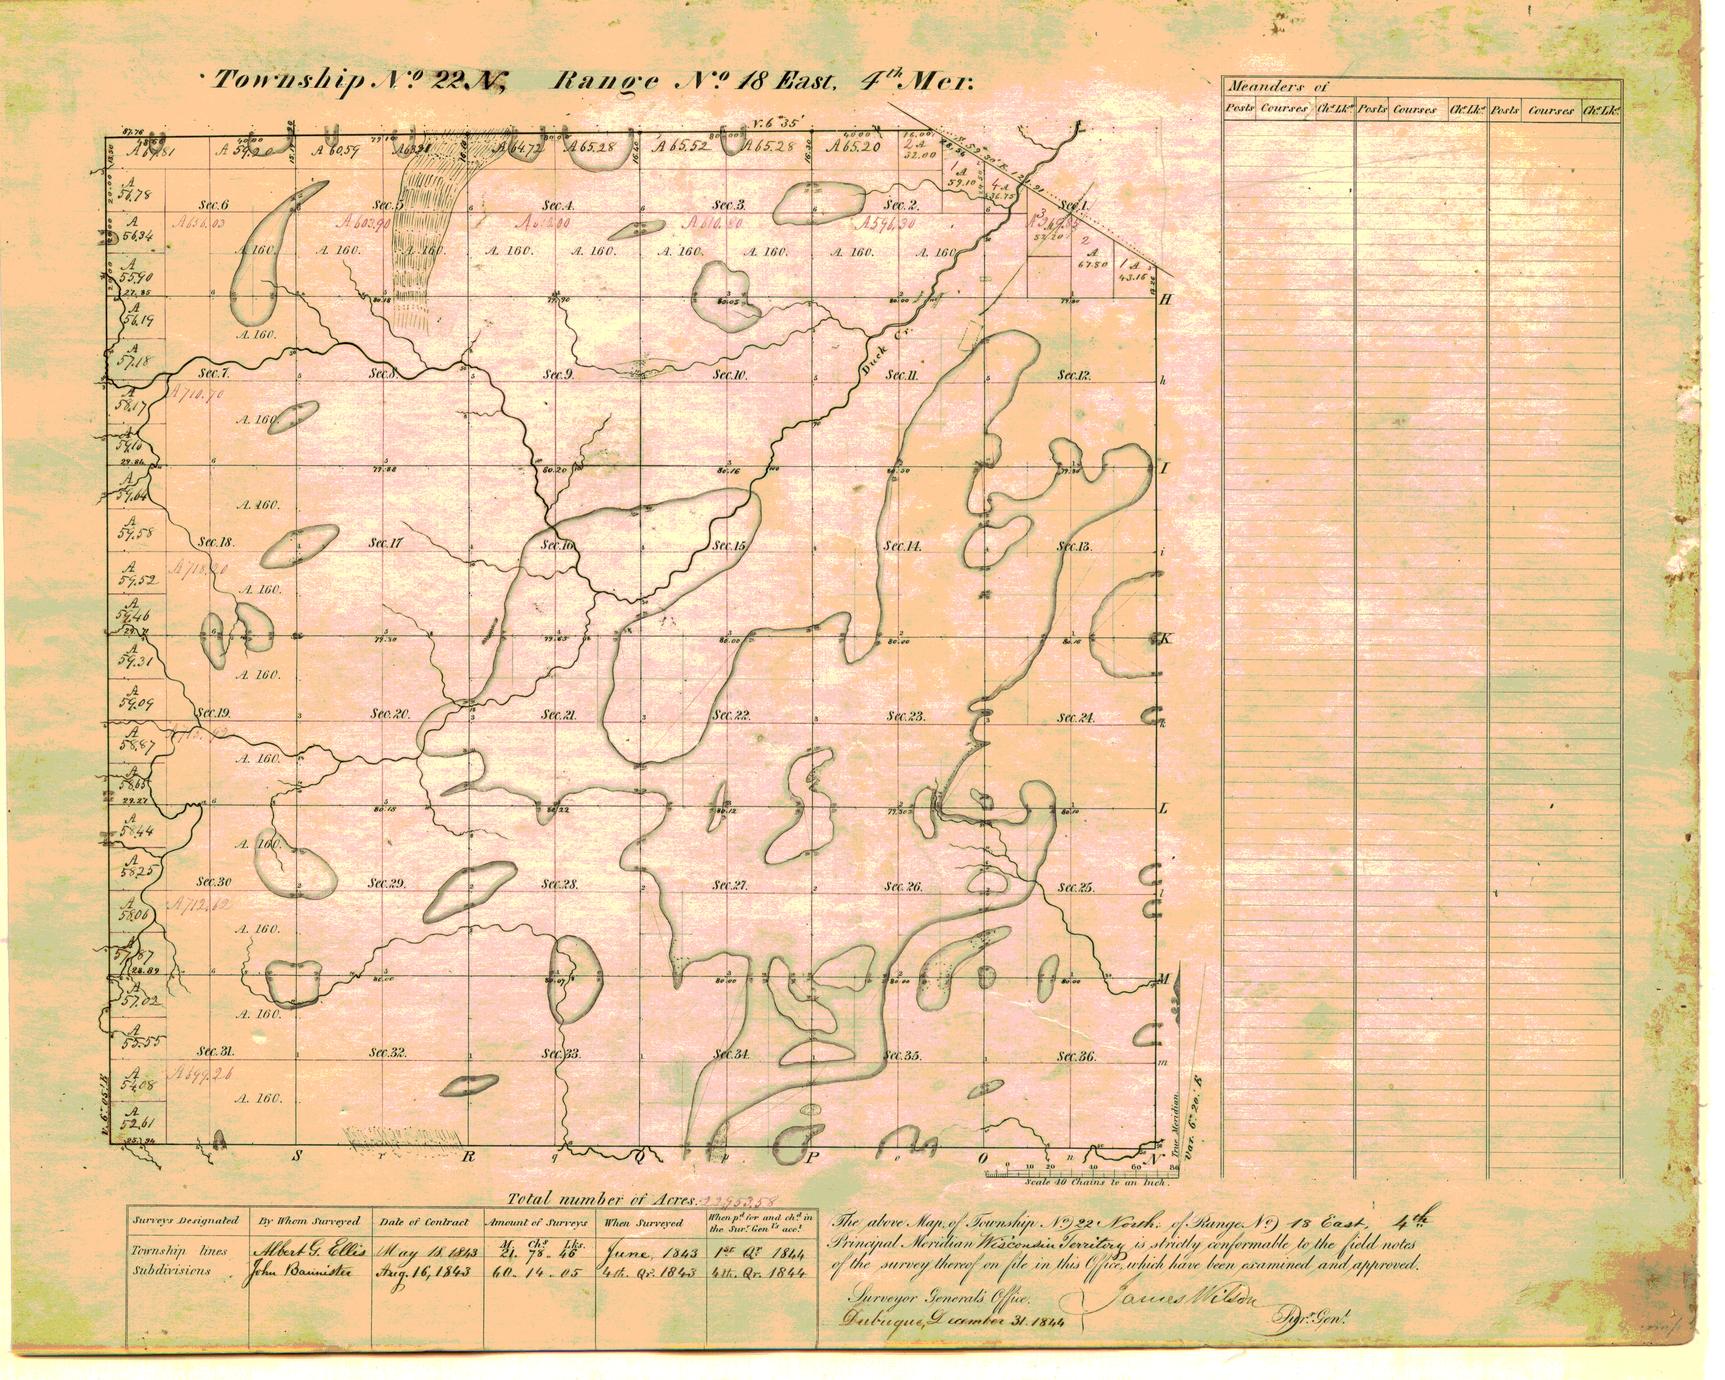 [Public Land Survey System map: Wisconsin Township 22 North, Range 18 East]